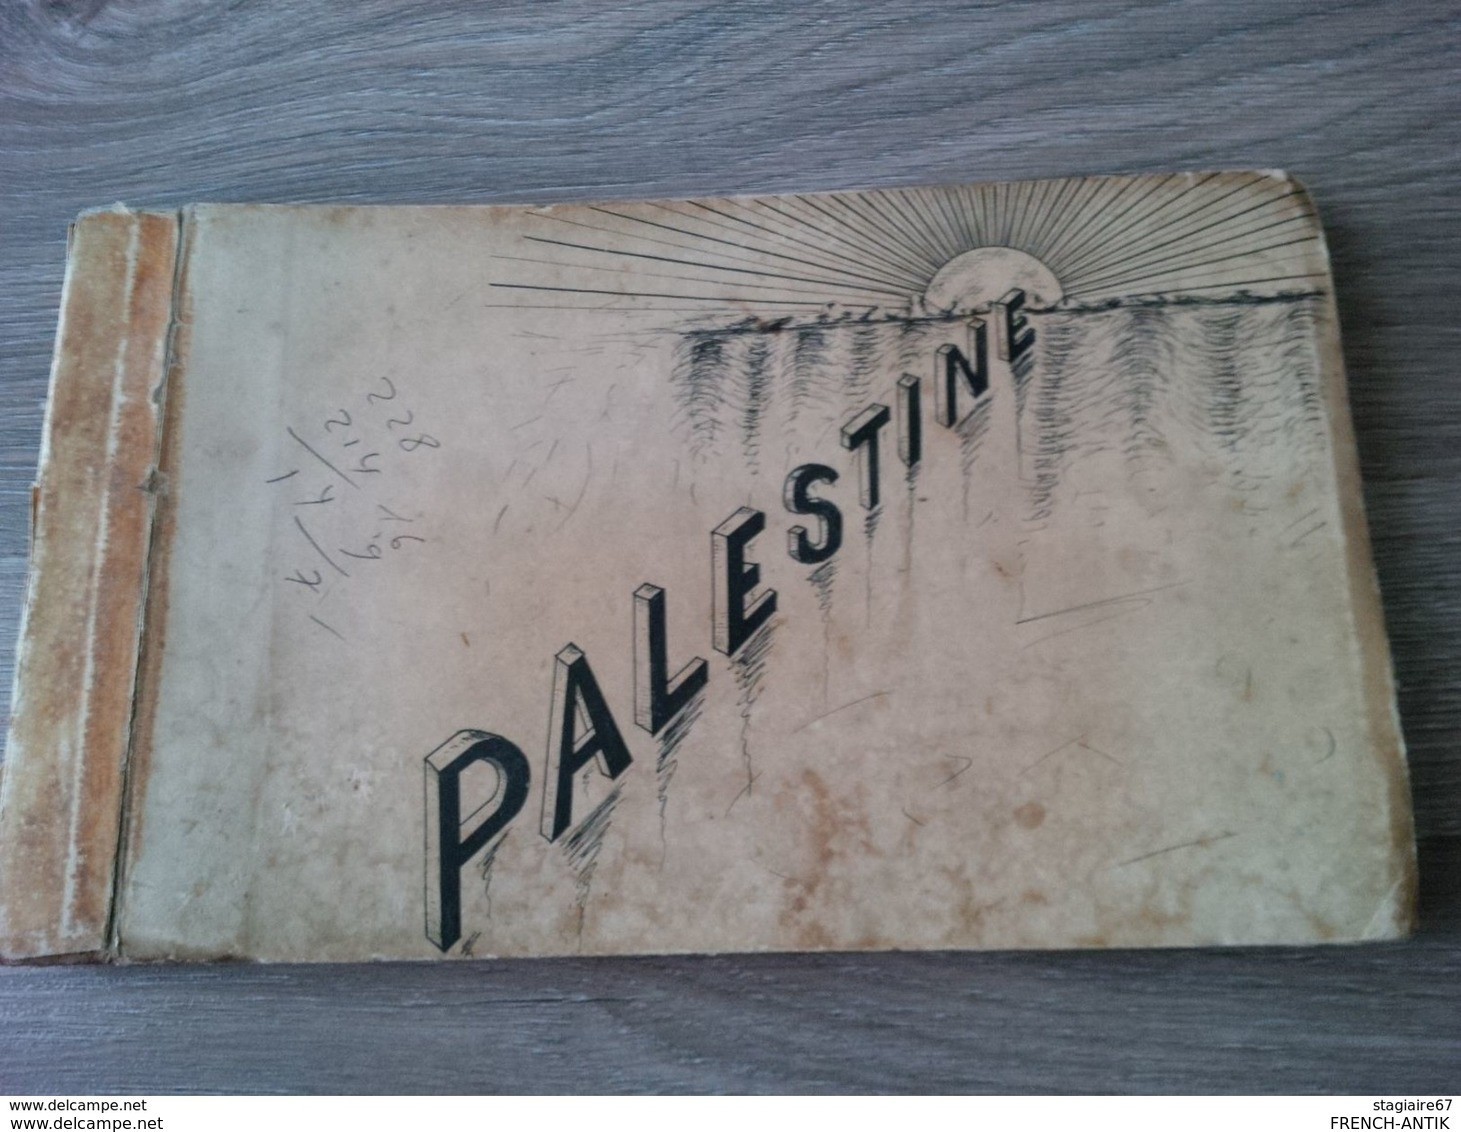 ALBUM DE PALESTINE JERUSALEM BETHLEEM NAZARETH JAFFA JERICHO 30 PHOTOS - Albums & Collections